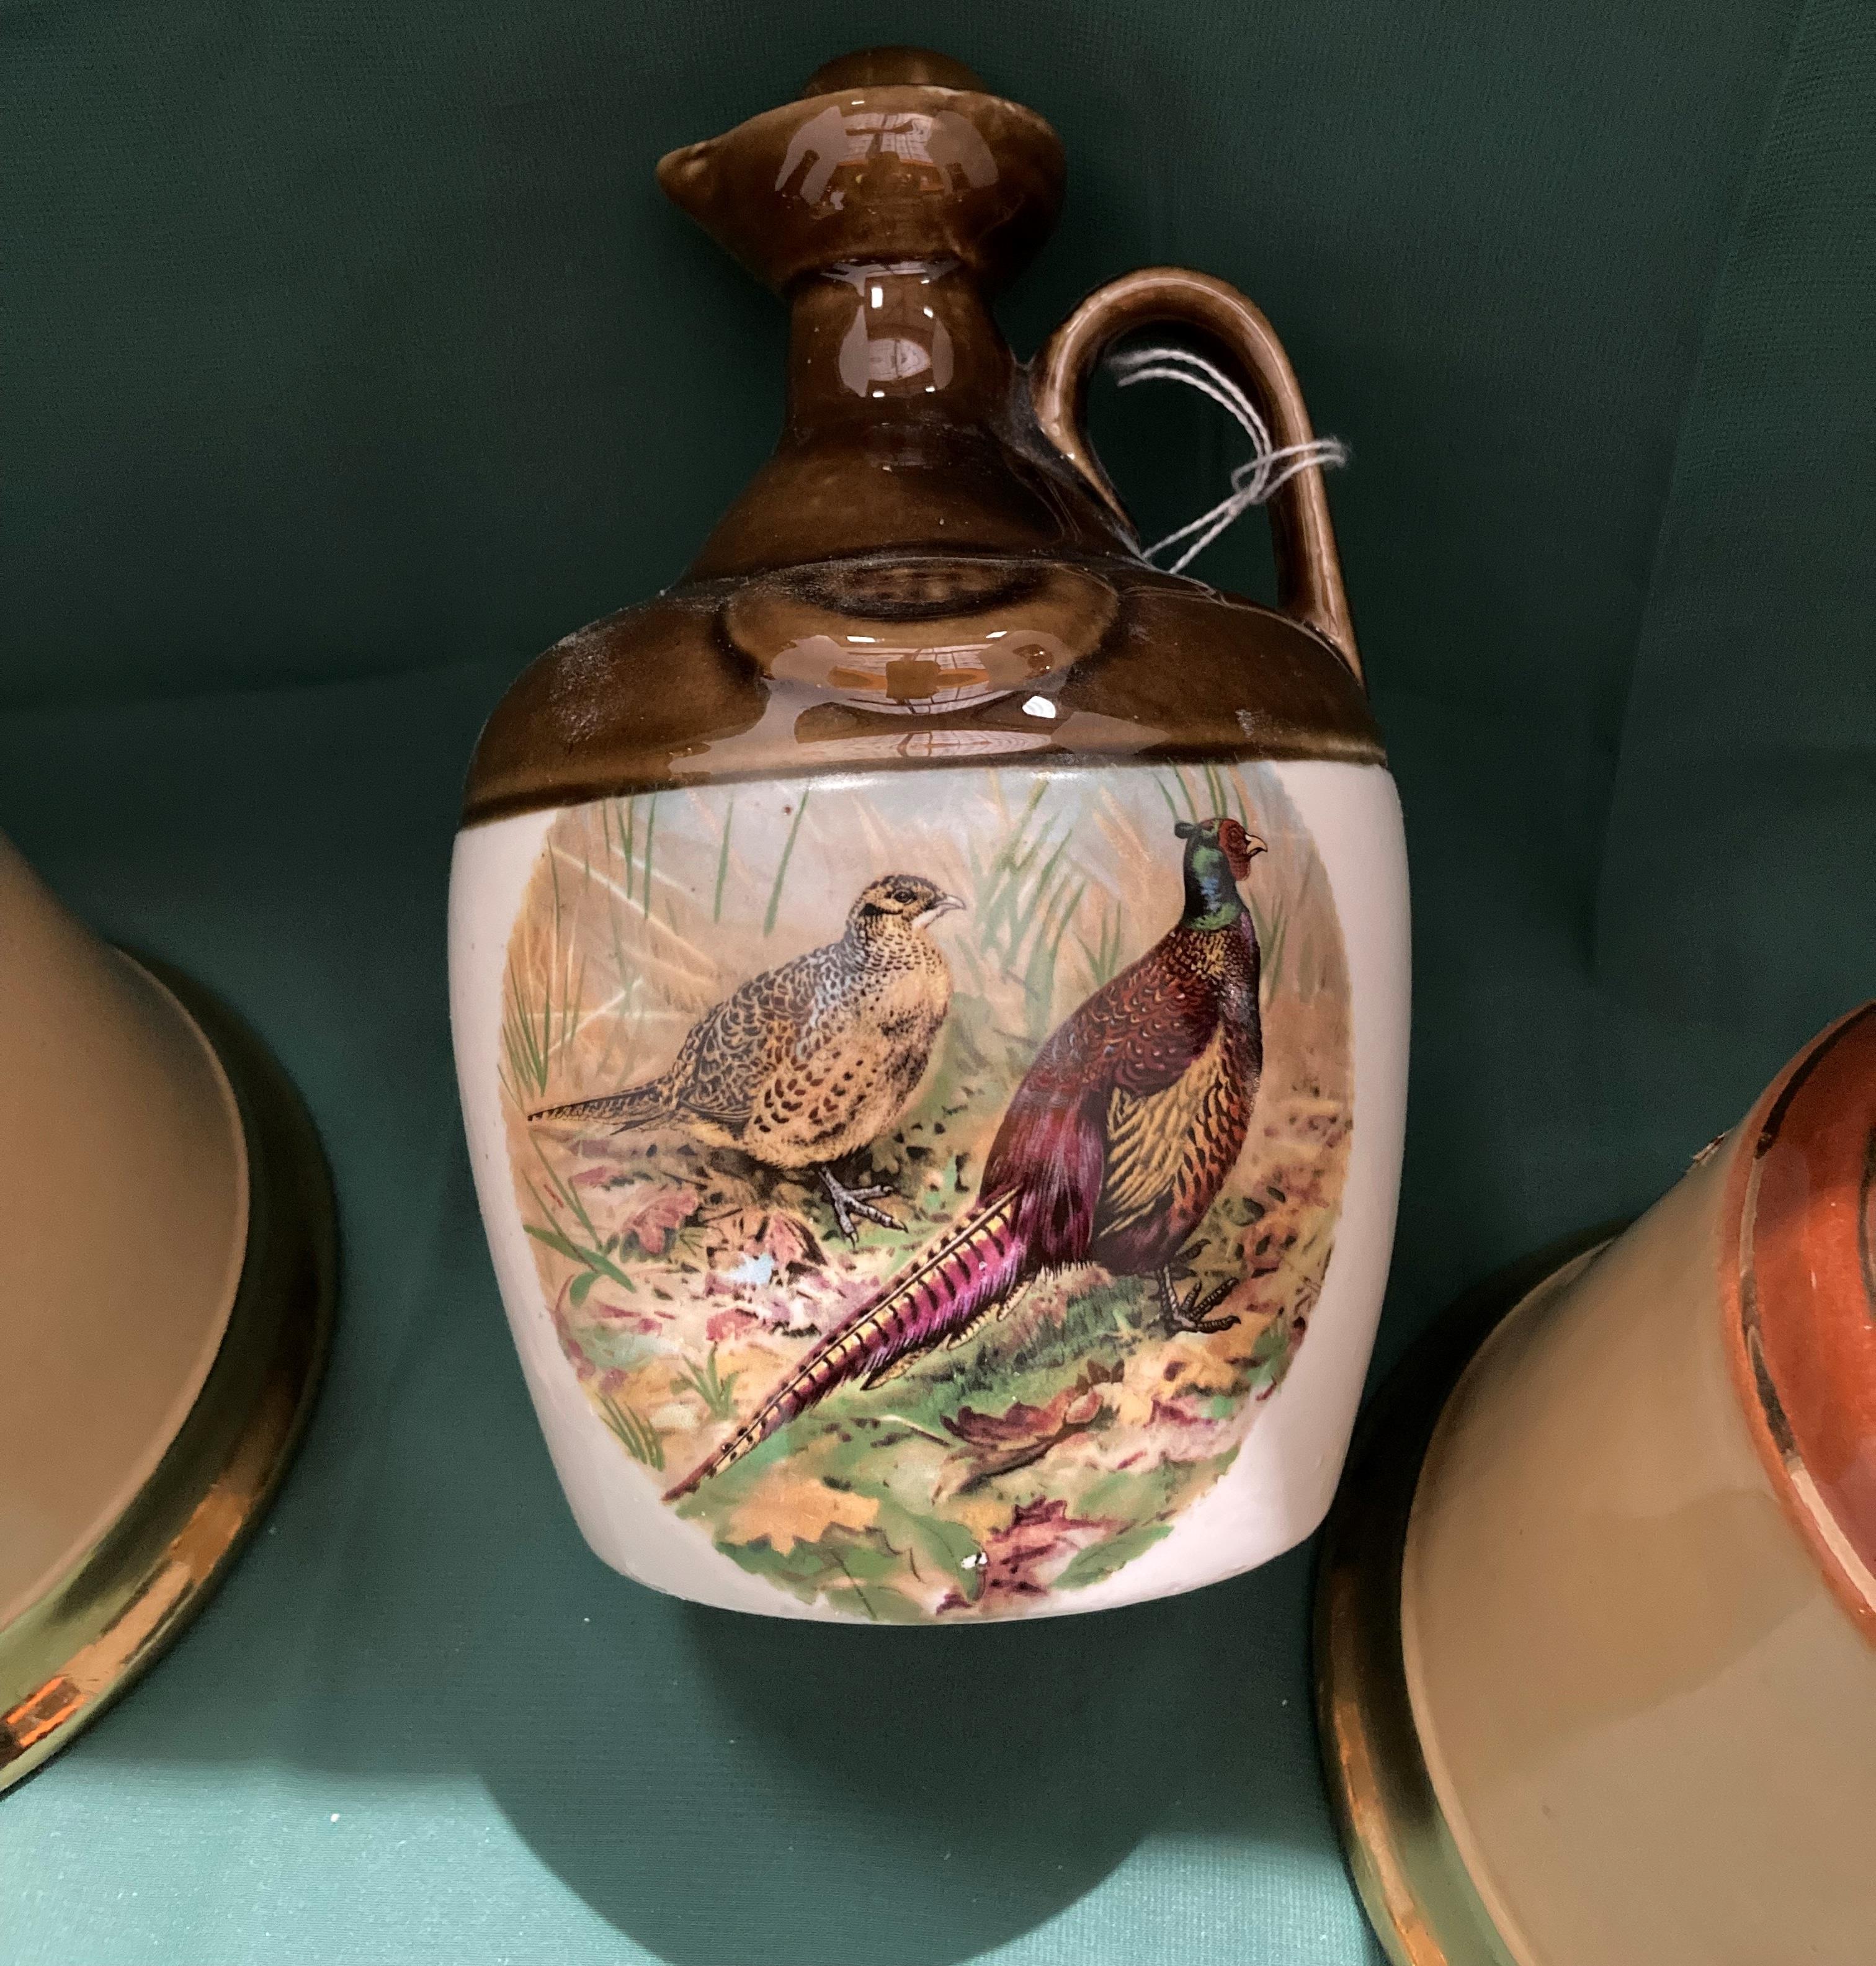 Pair of Bells ceramic wade 26 2/3floz bottles and 13 1/3floz bottles and a Montrose pheasant - Image 4 of 4